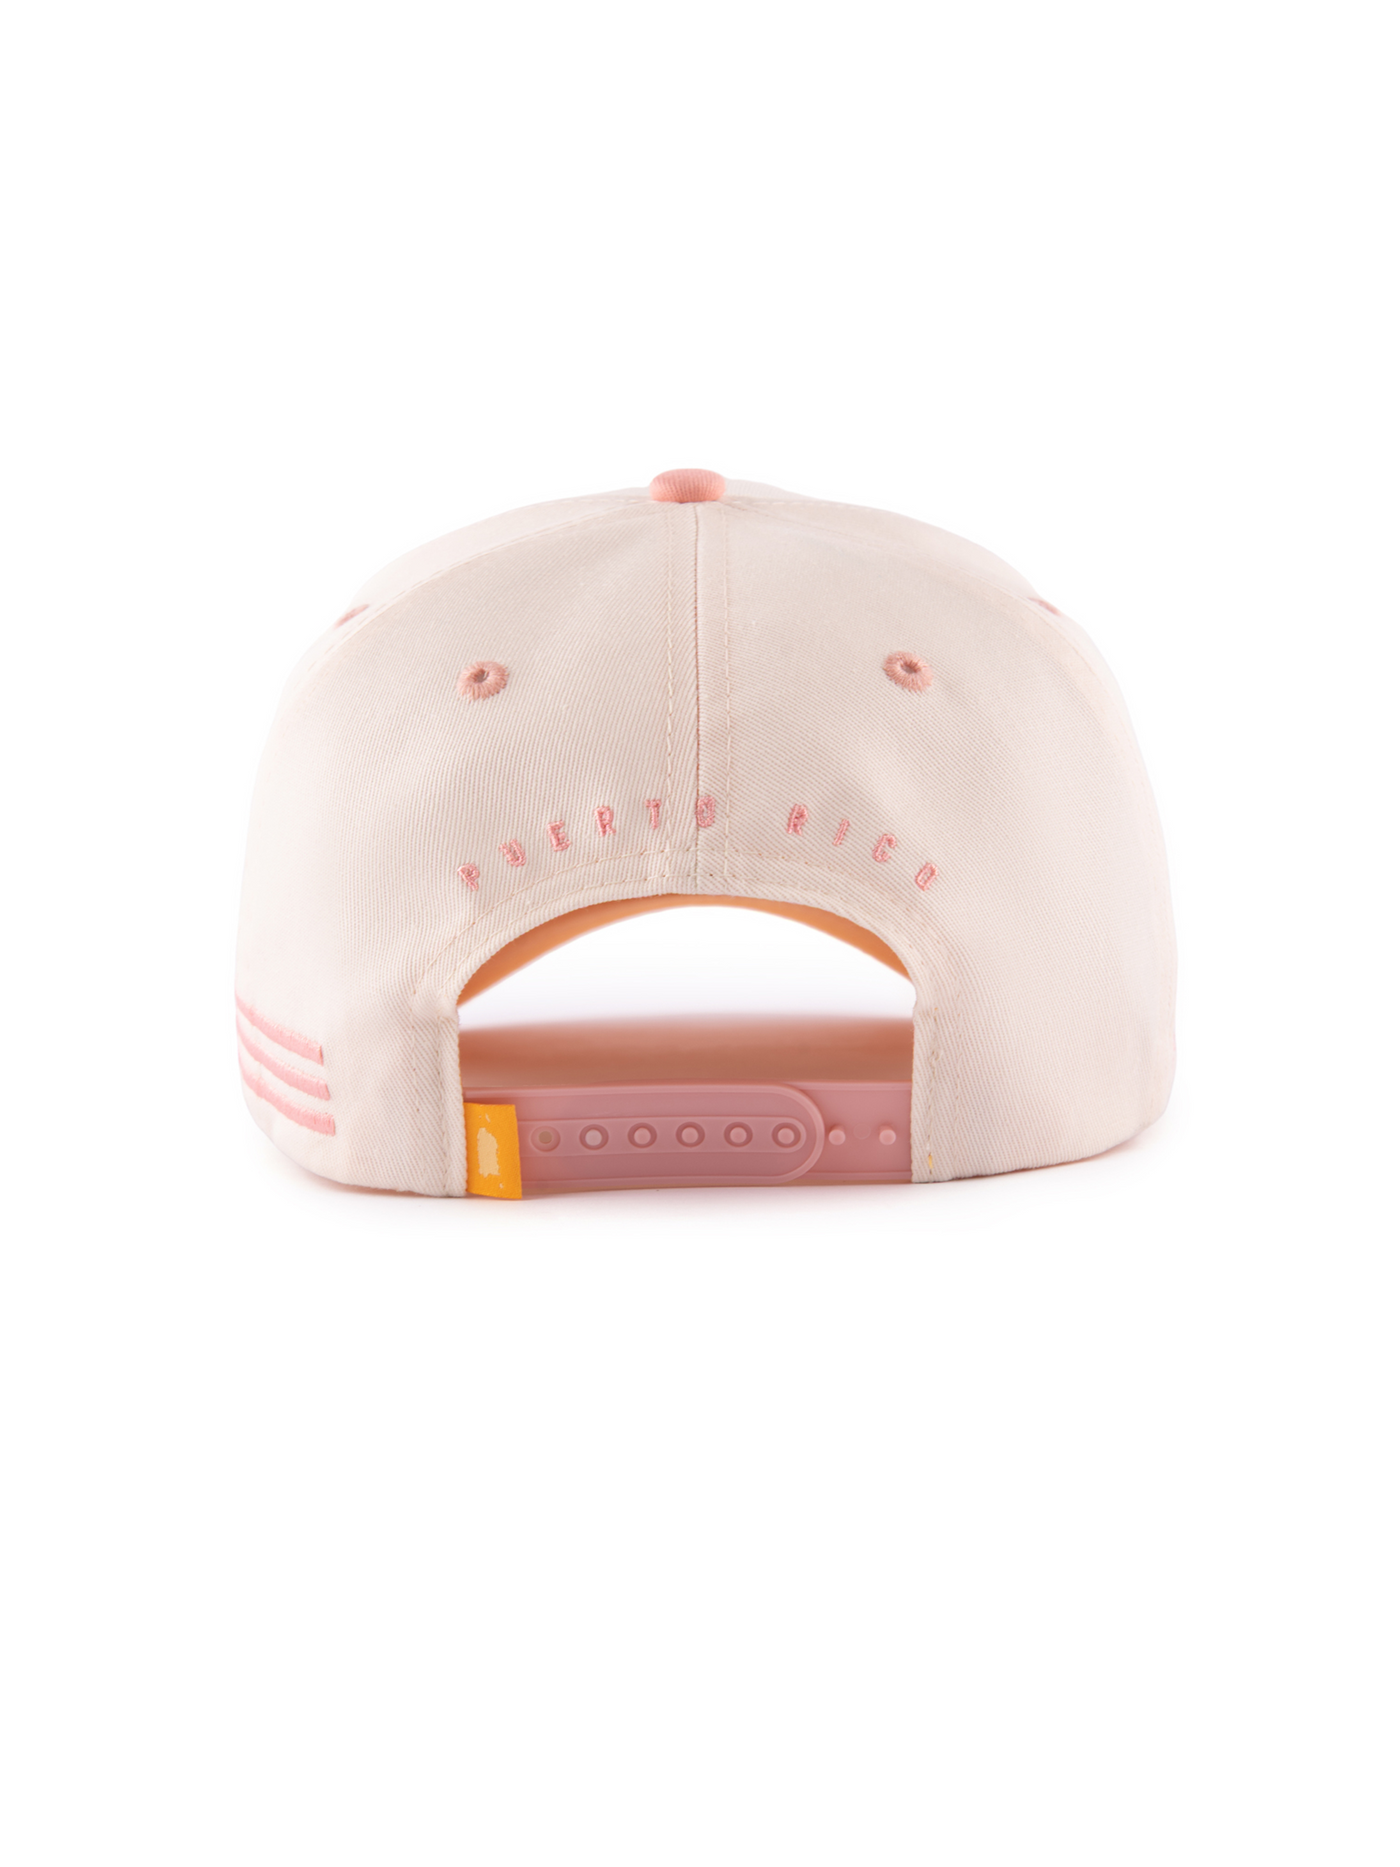 DP ICON - Baseball Cap - Light Pink